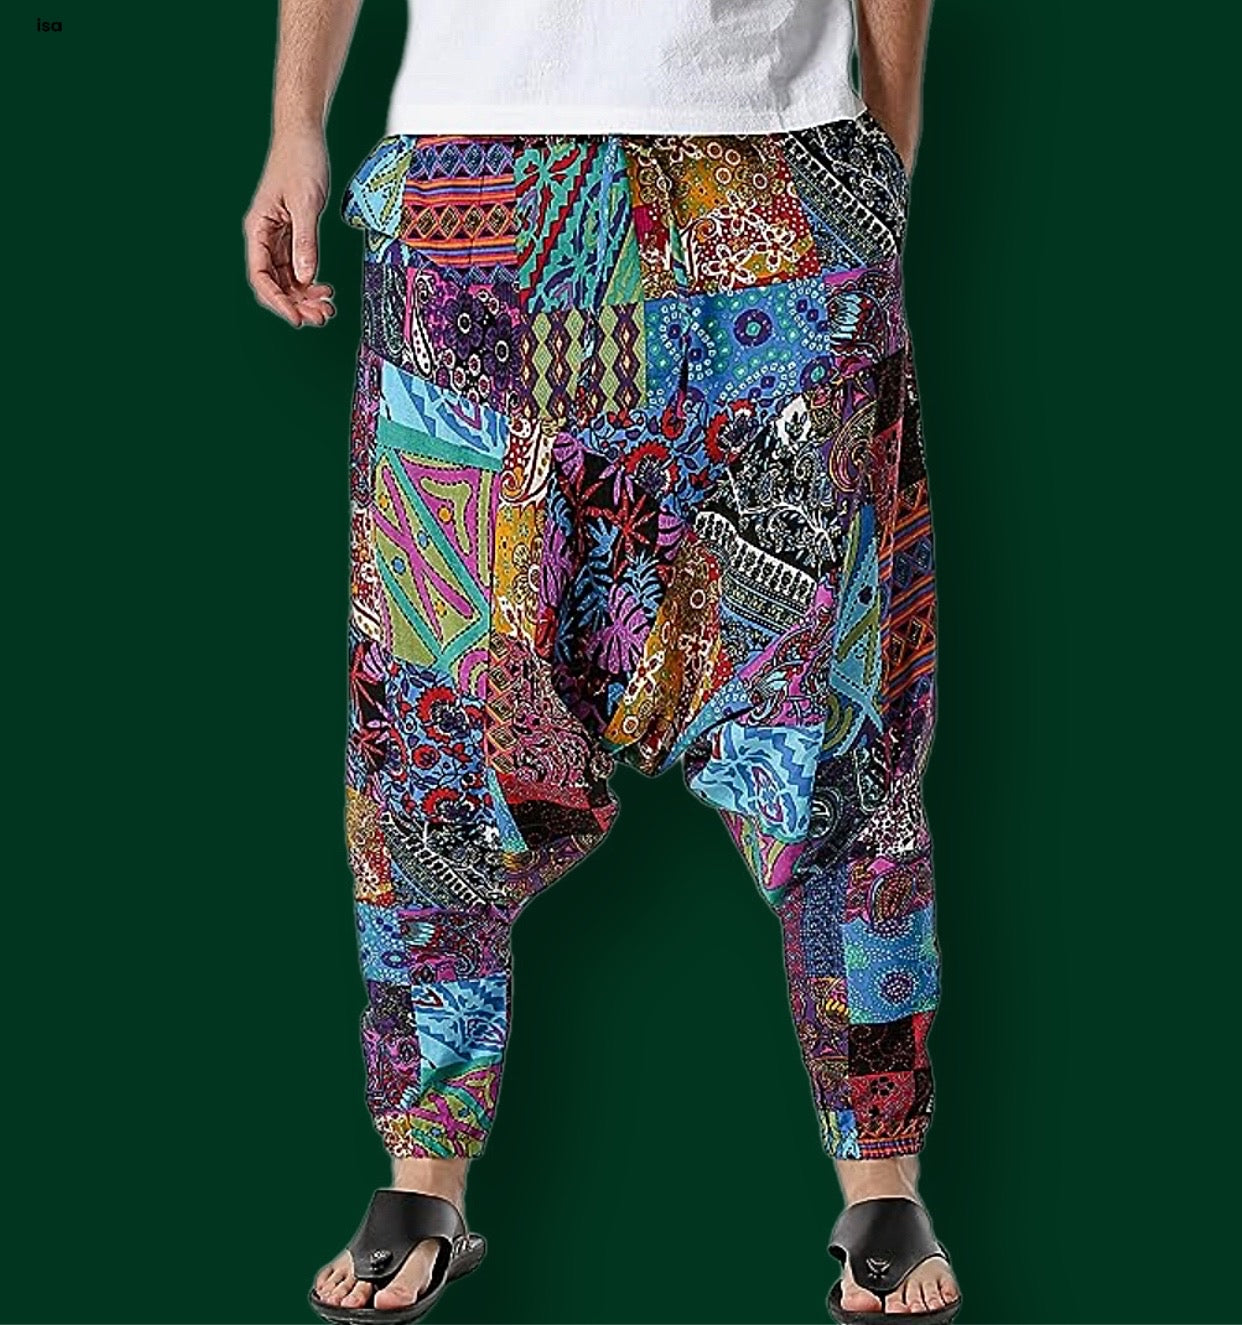 Unisex Hippie Baggie Pants